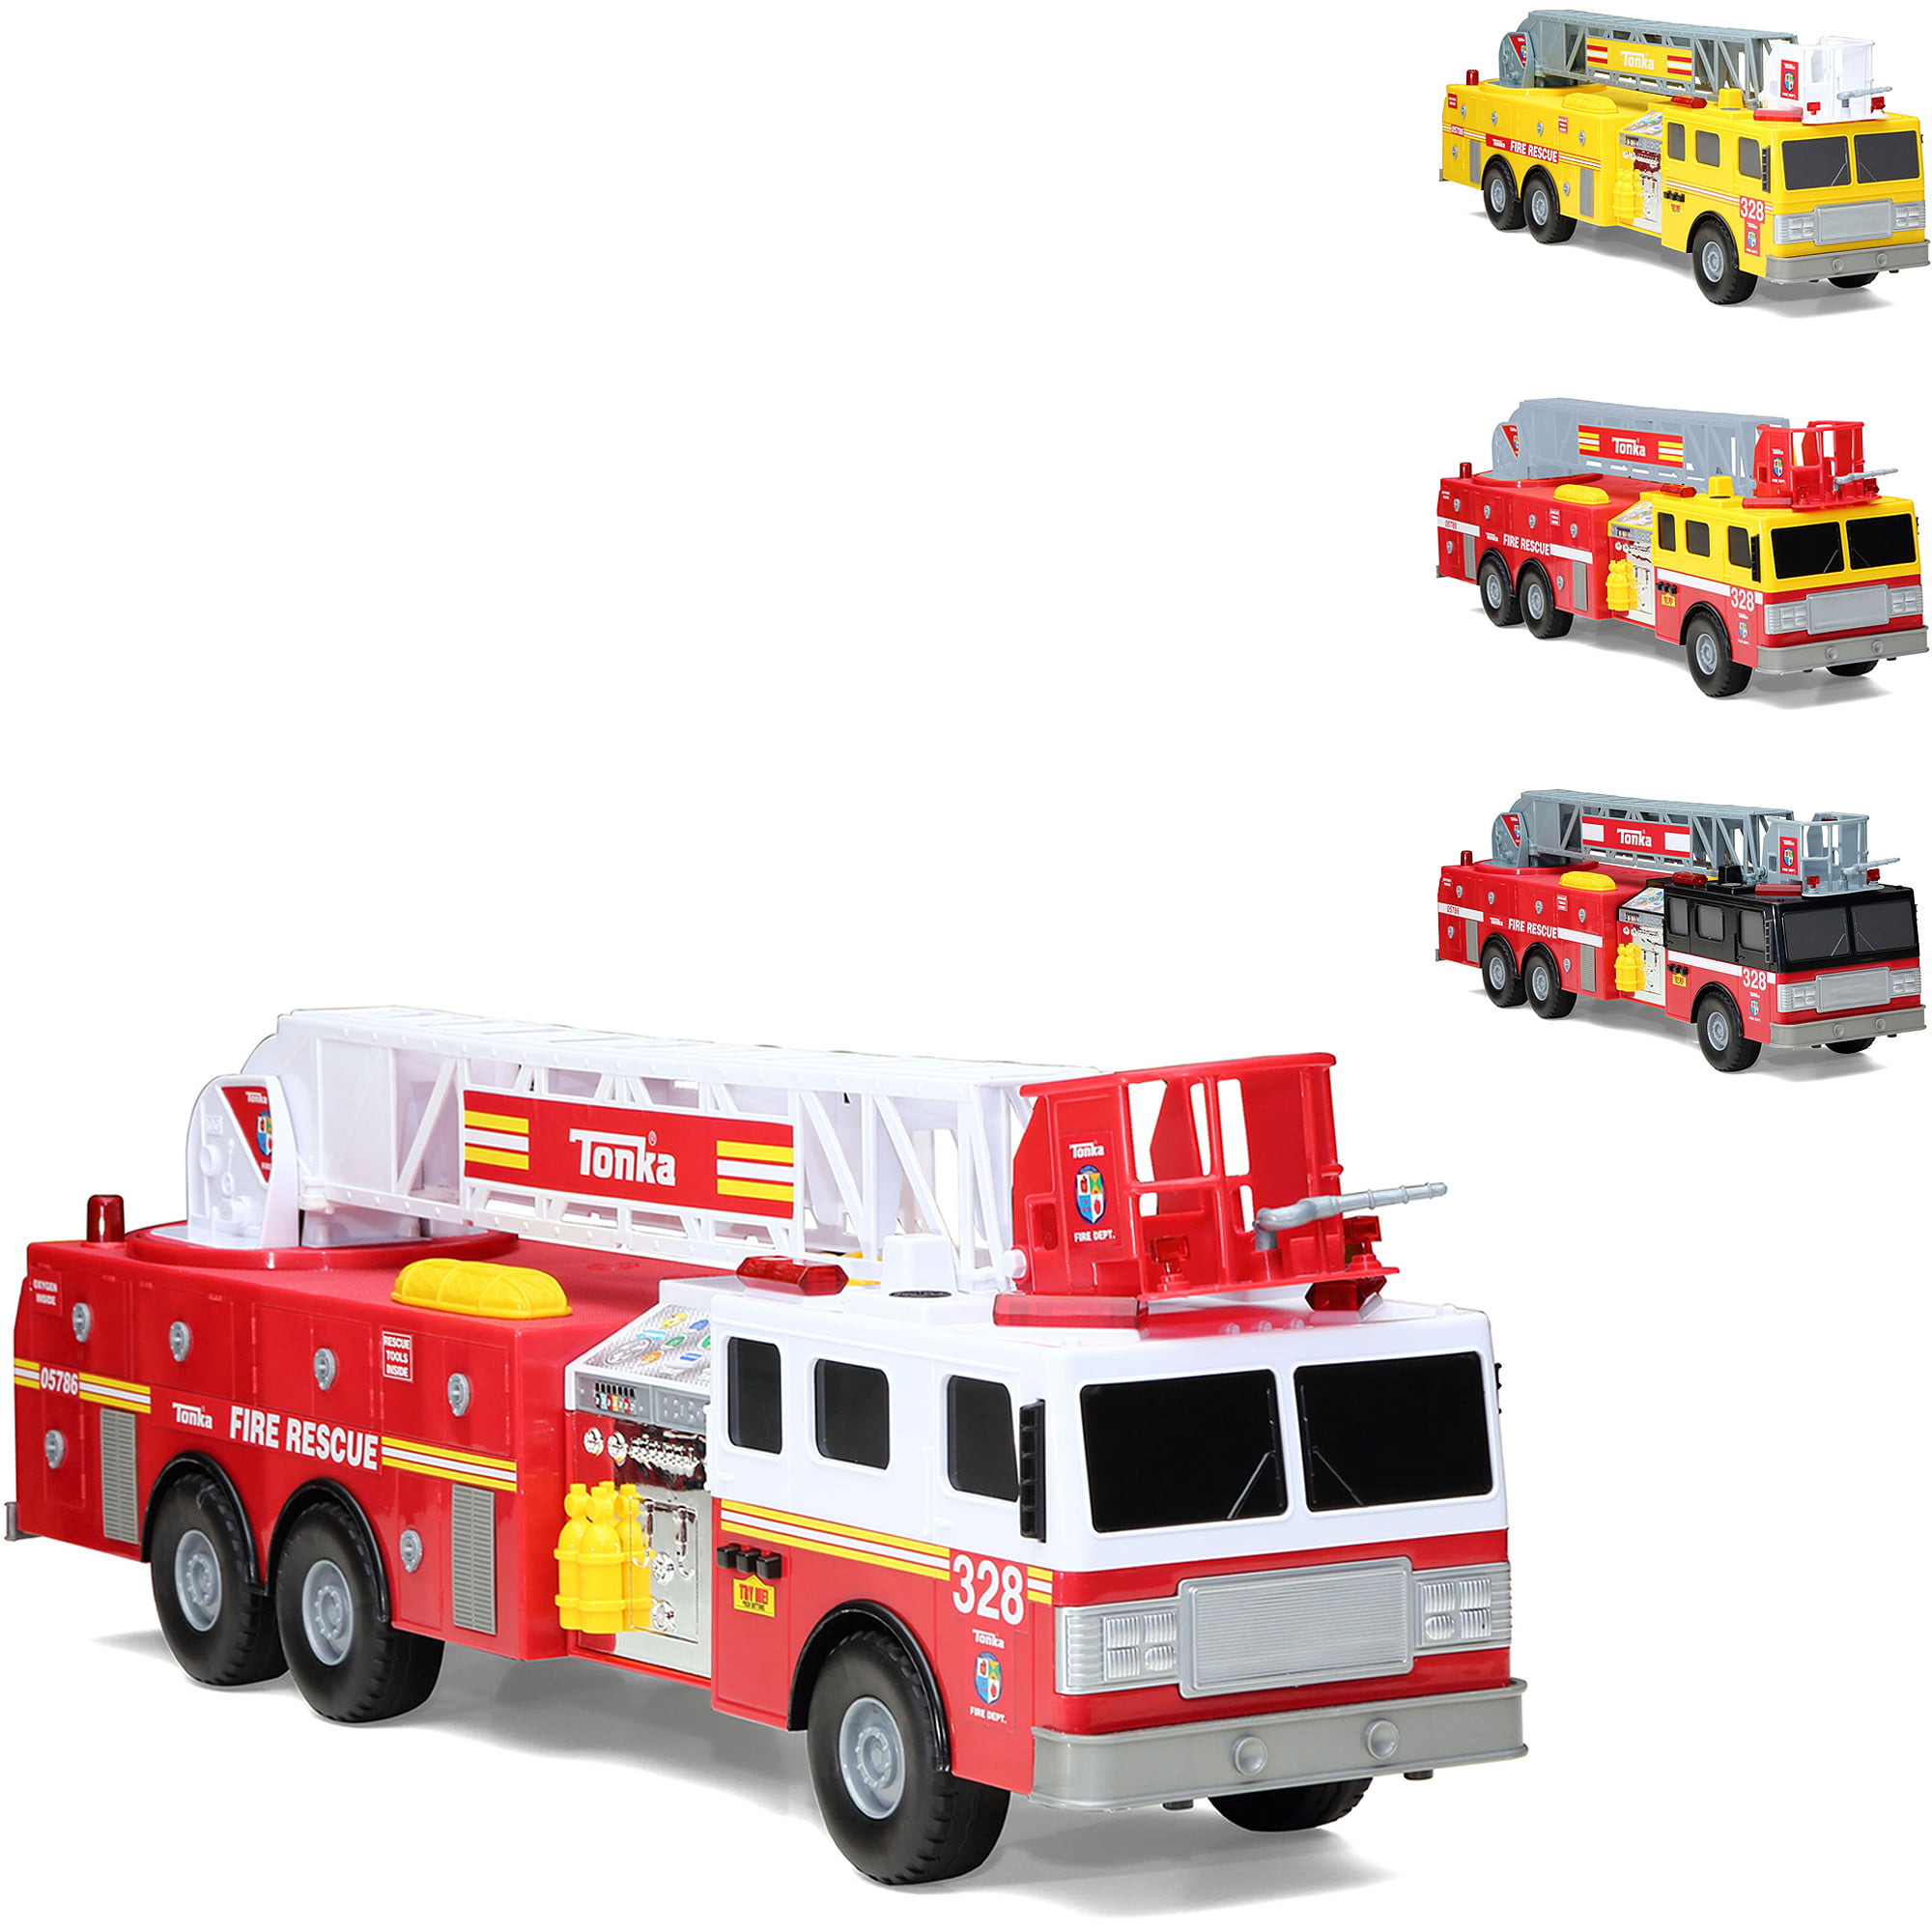 Toy fire trucks creator kit